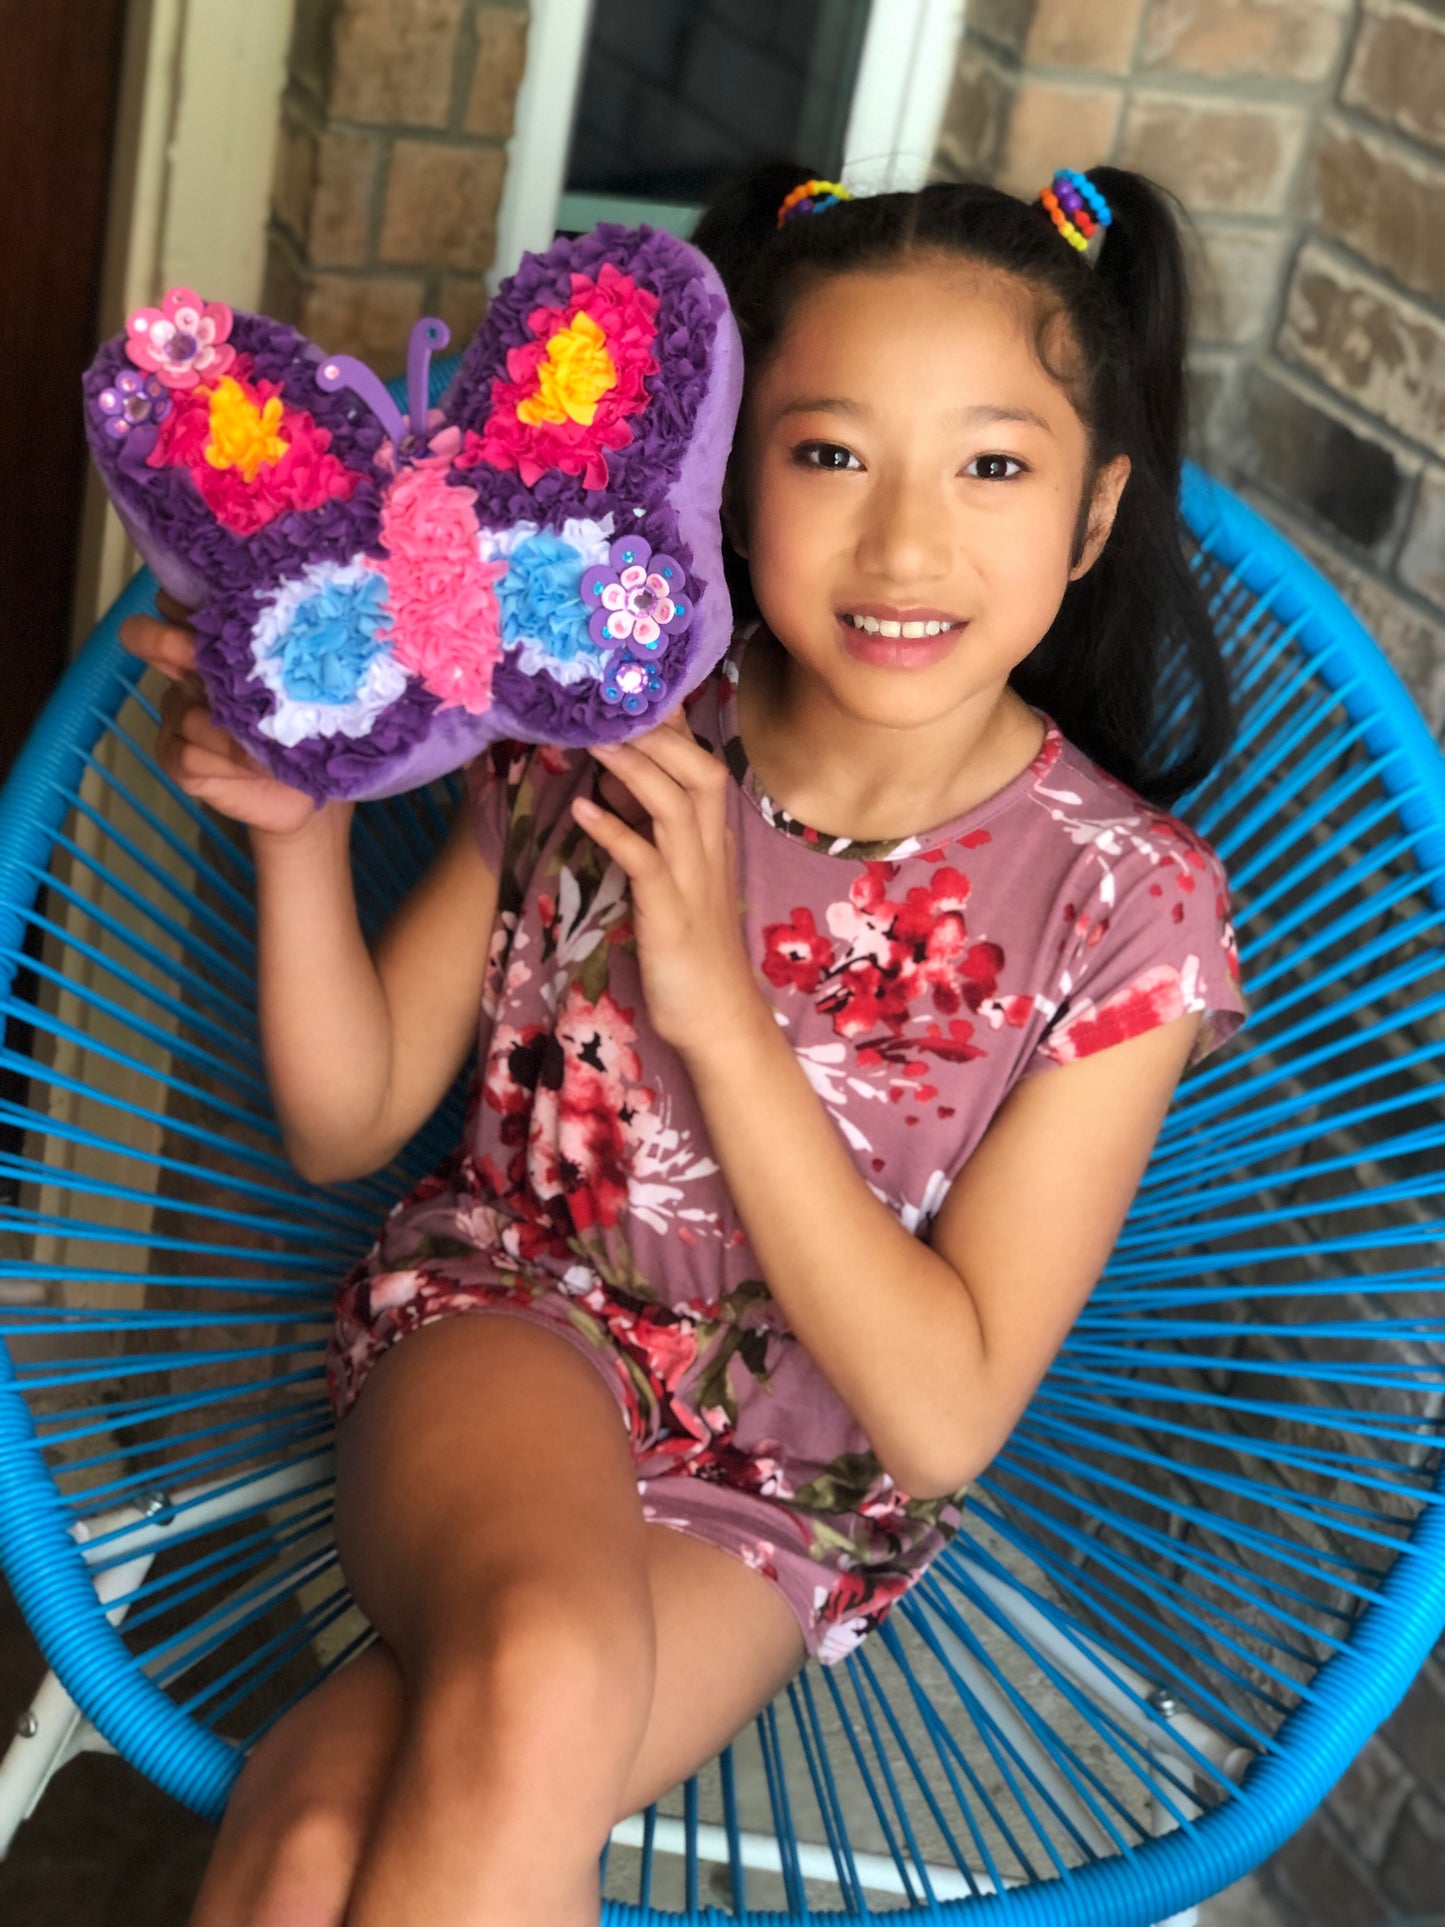 Plush Craft Pillow – Child's Play